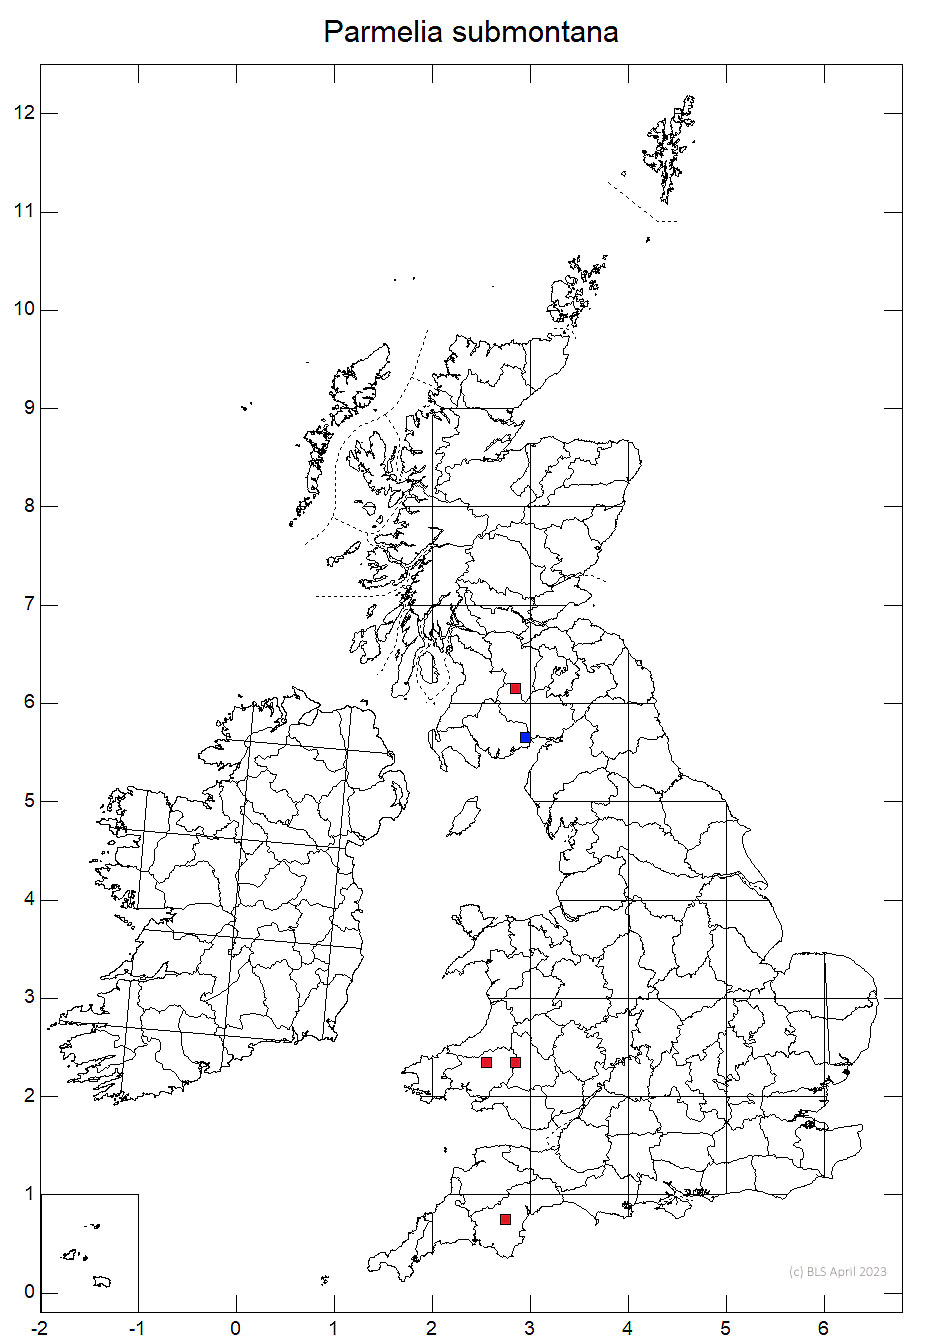 Parmelia submontana 10km sq distribution map